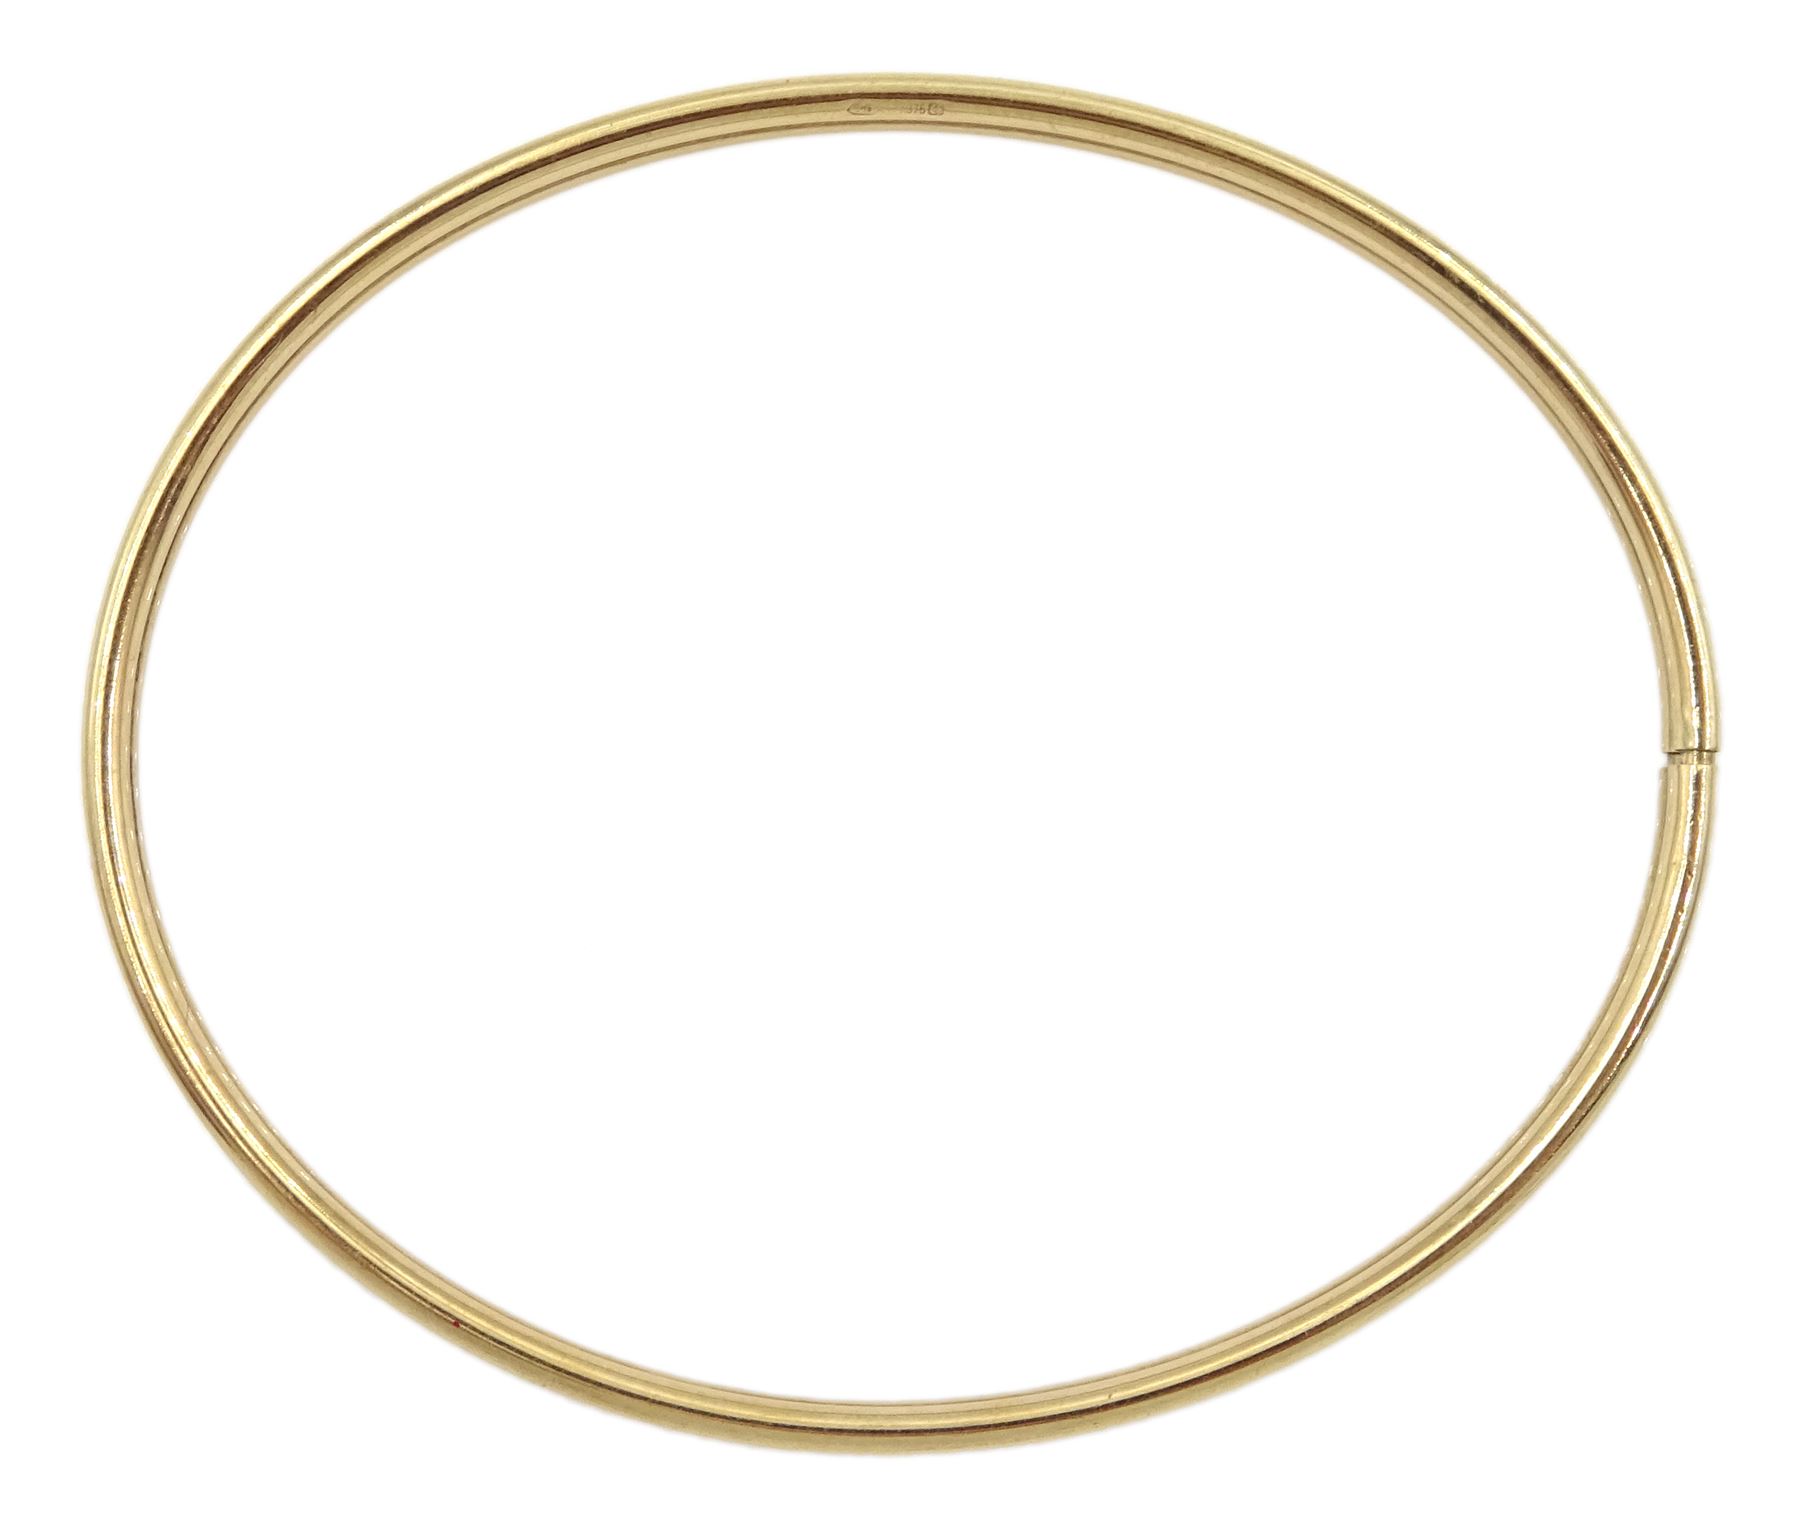 9ct gold bangle - Image 2 of 2